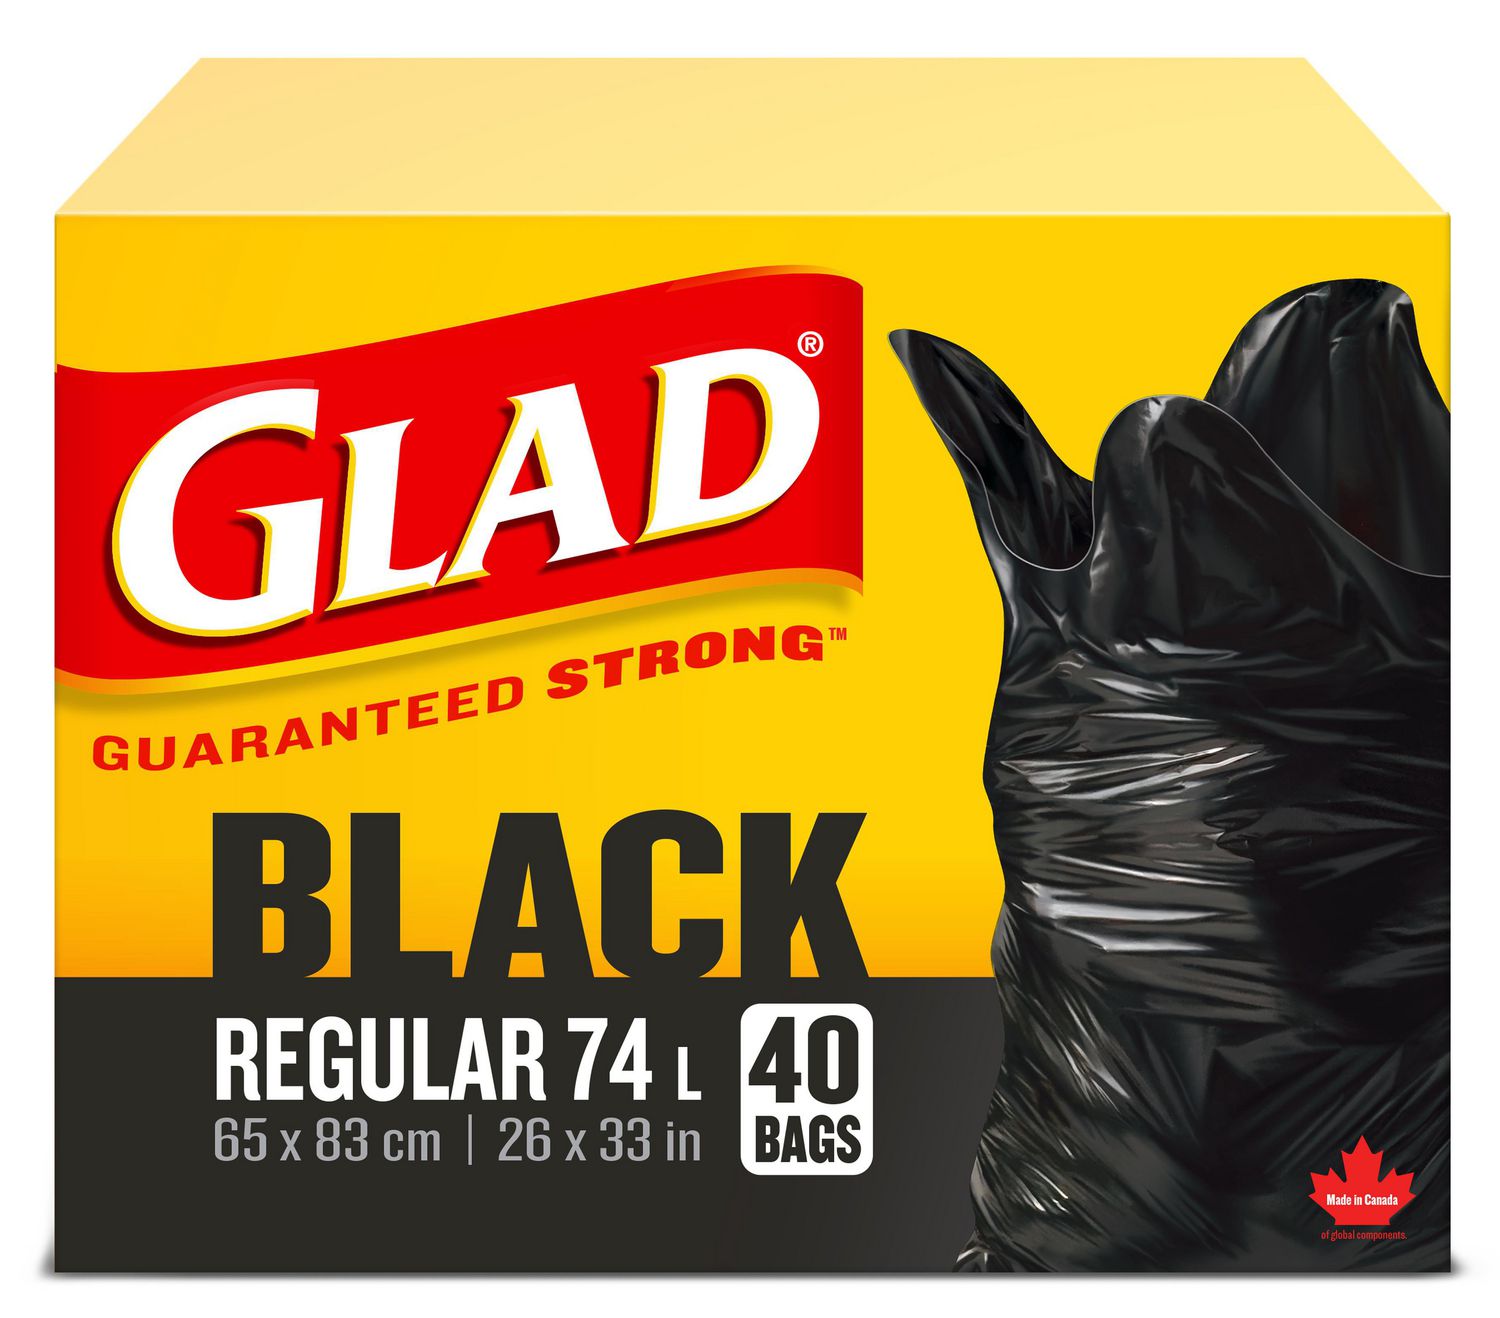 Glad Black Garbage Bags Regular 74 Litres 40 Trash Bags Walmart Canada 